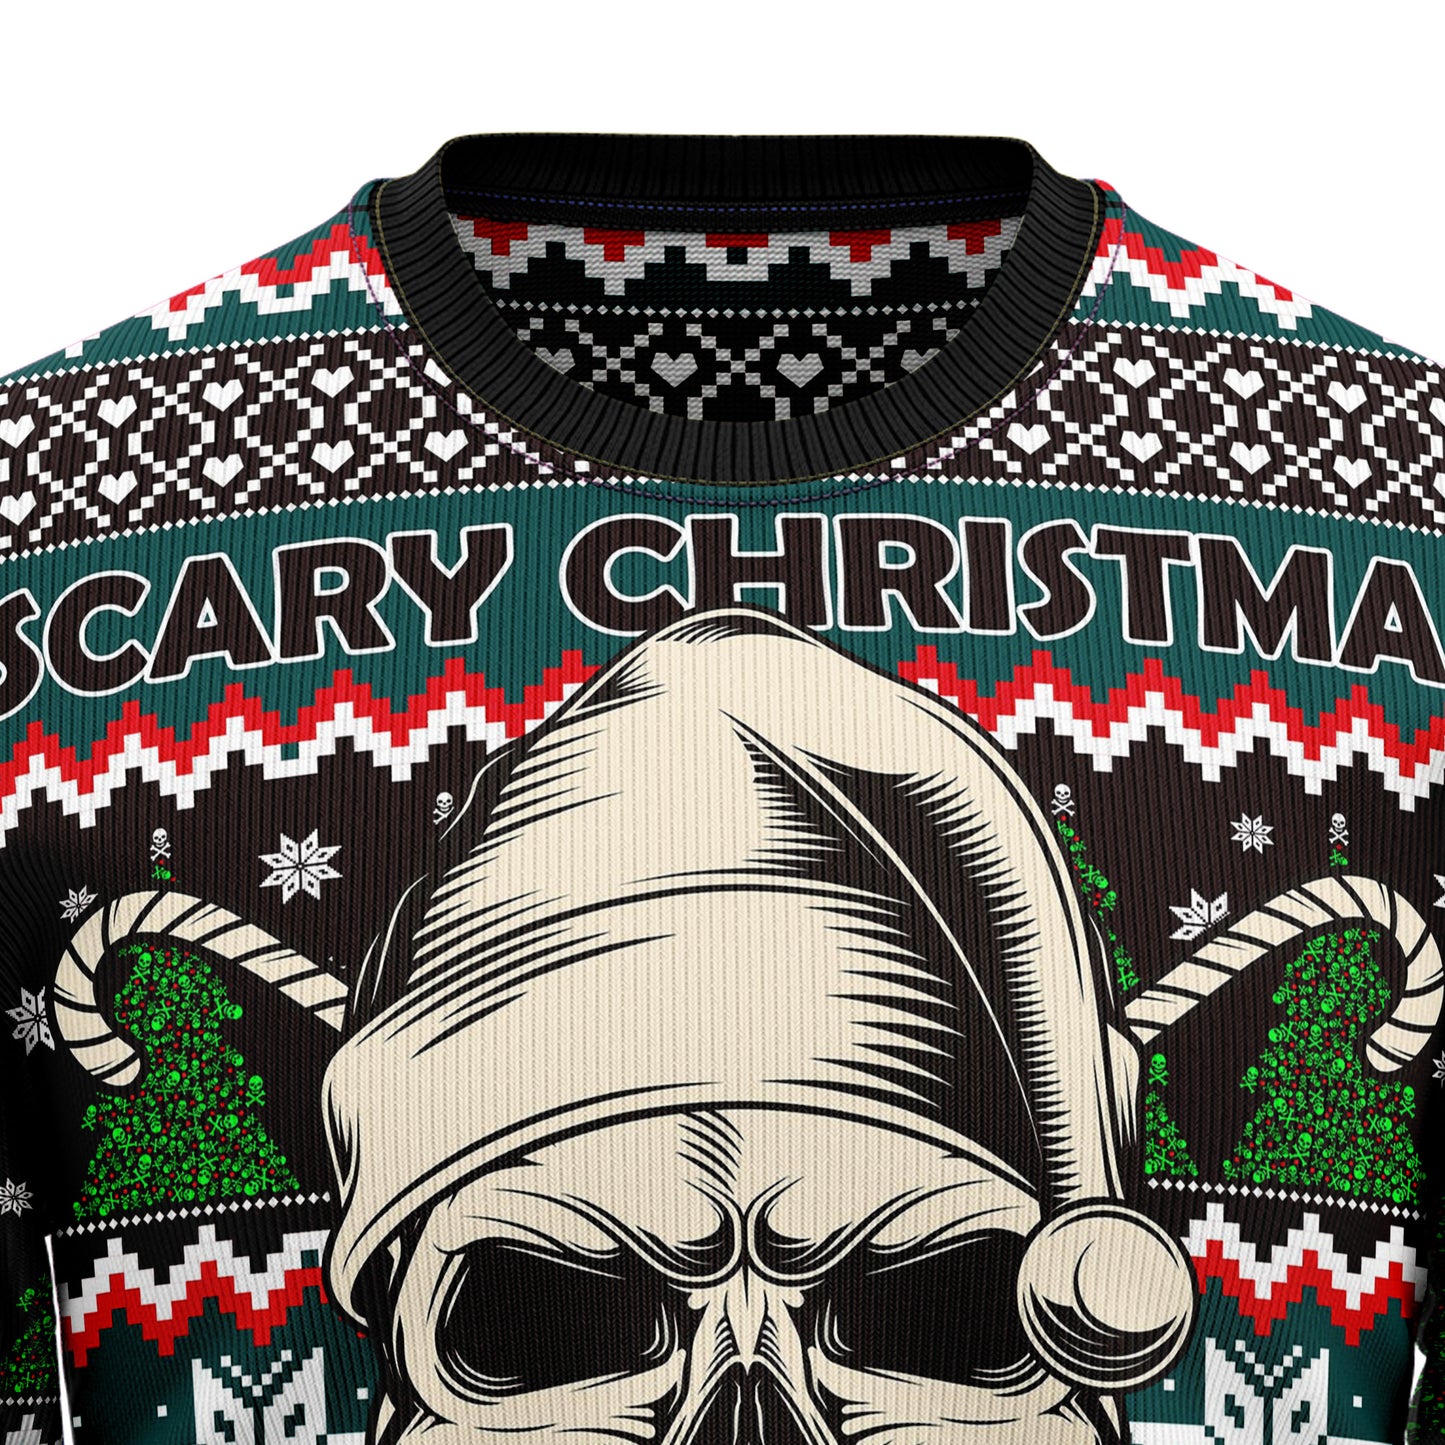 Skull Scary Christmas TY249 Ugly Christmas Sweater